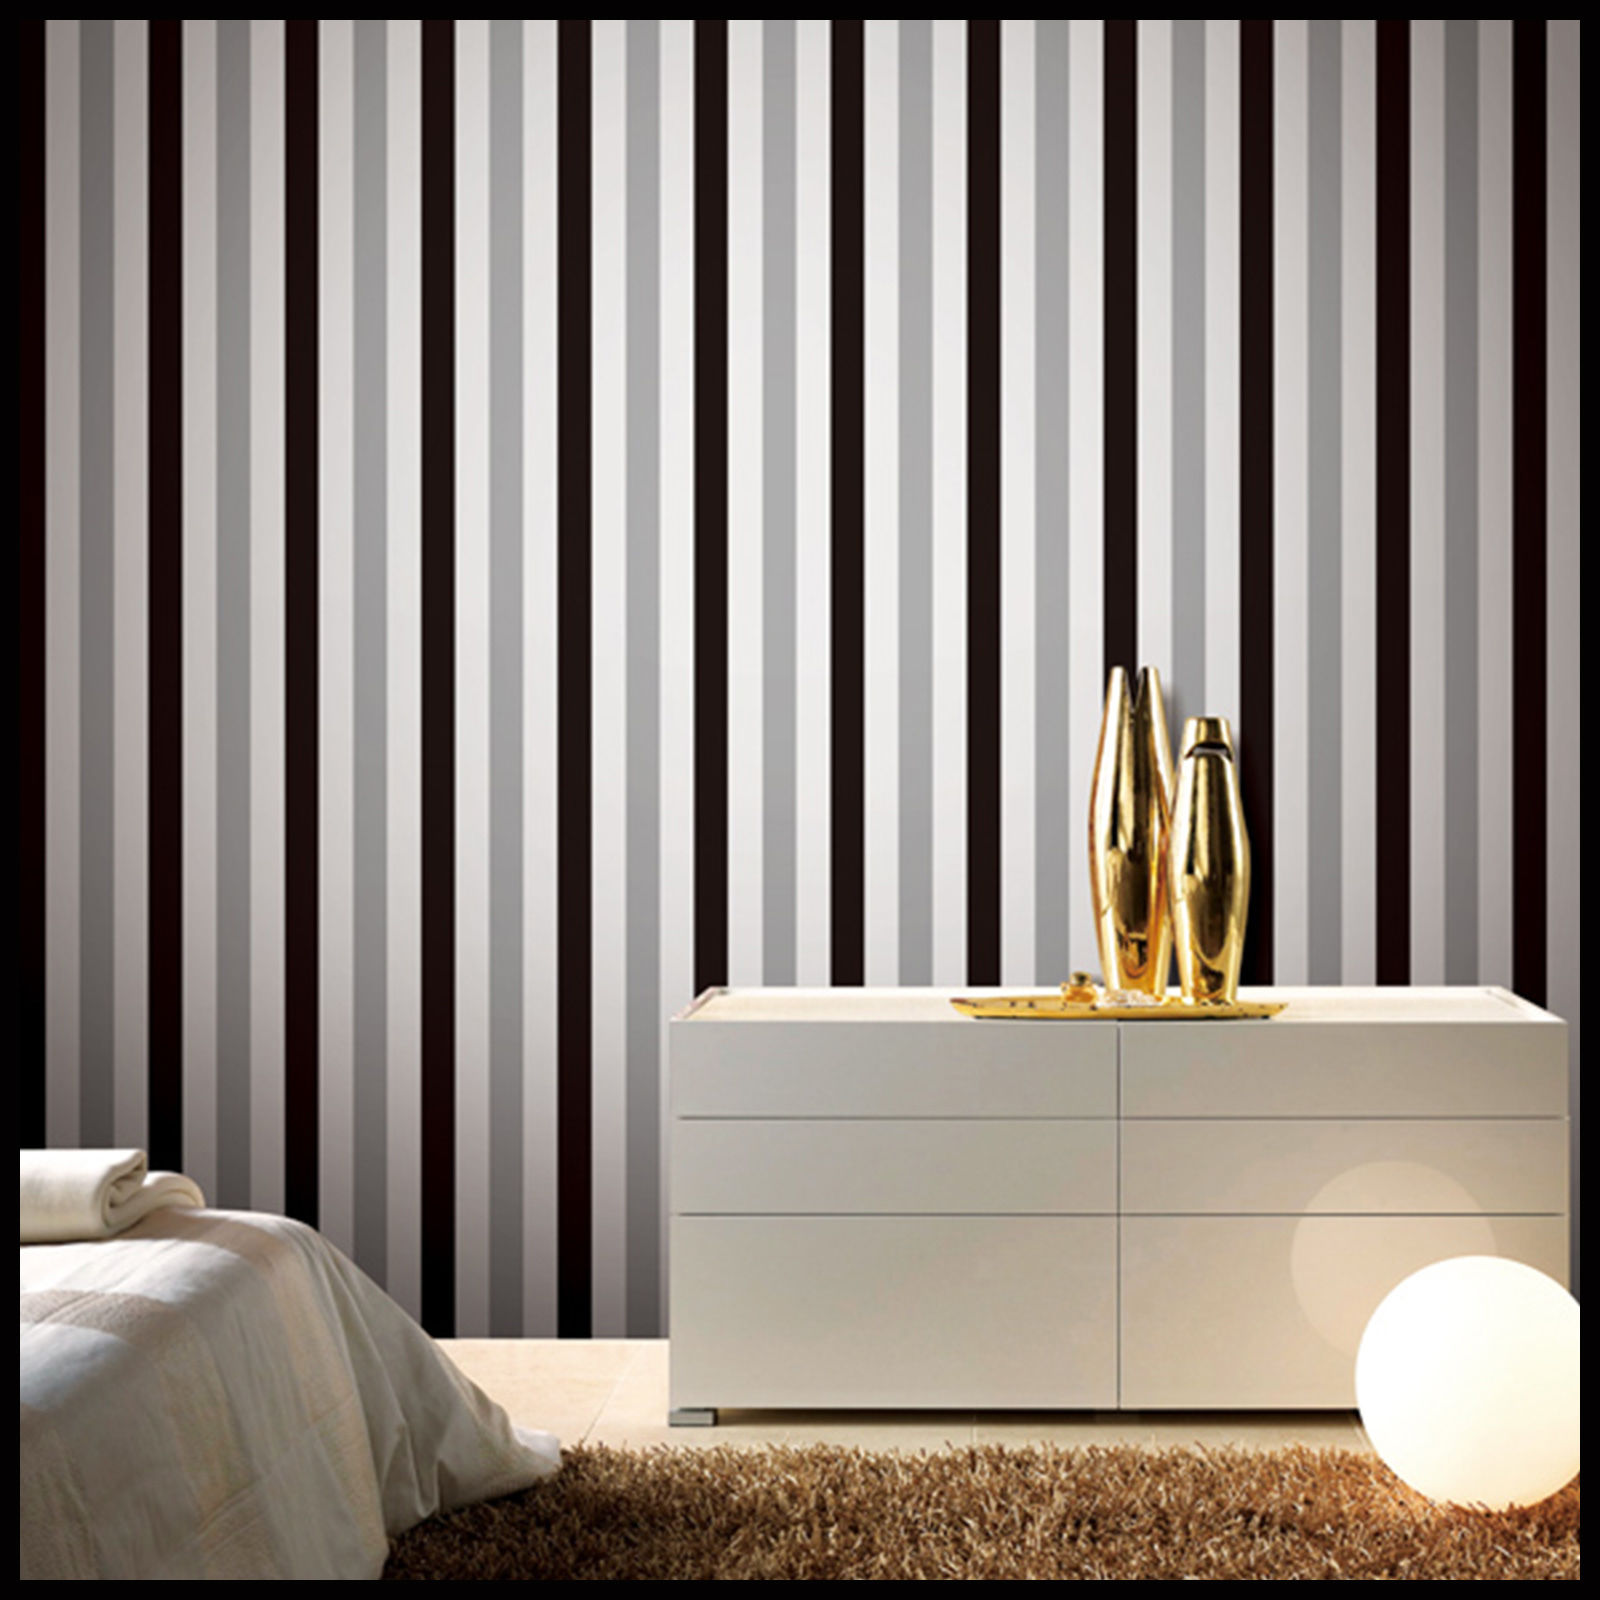 Wp32 Metallic Silver Black White Striped Wallpaper Wall Paper Roll